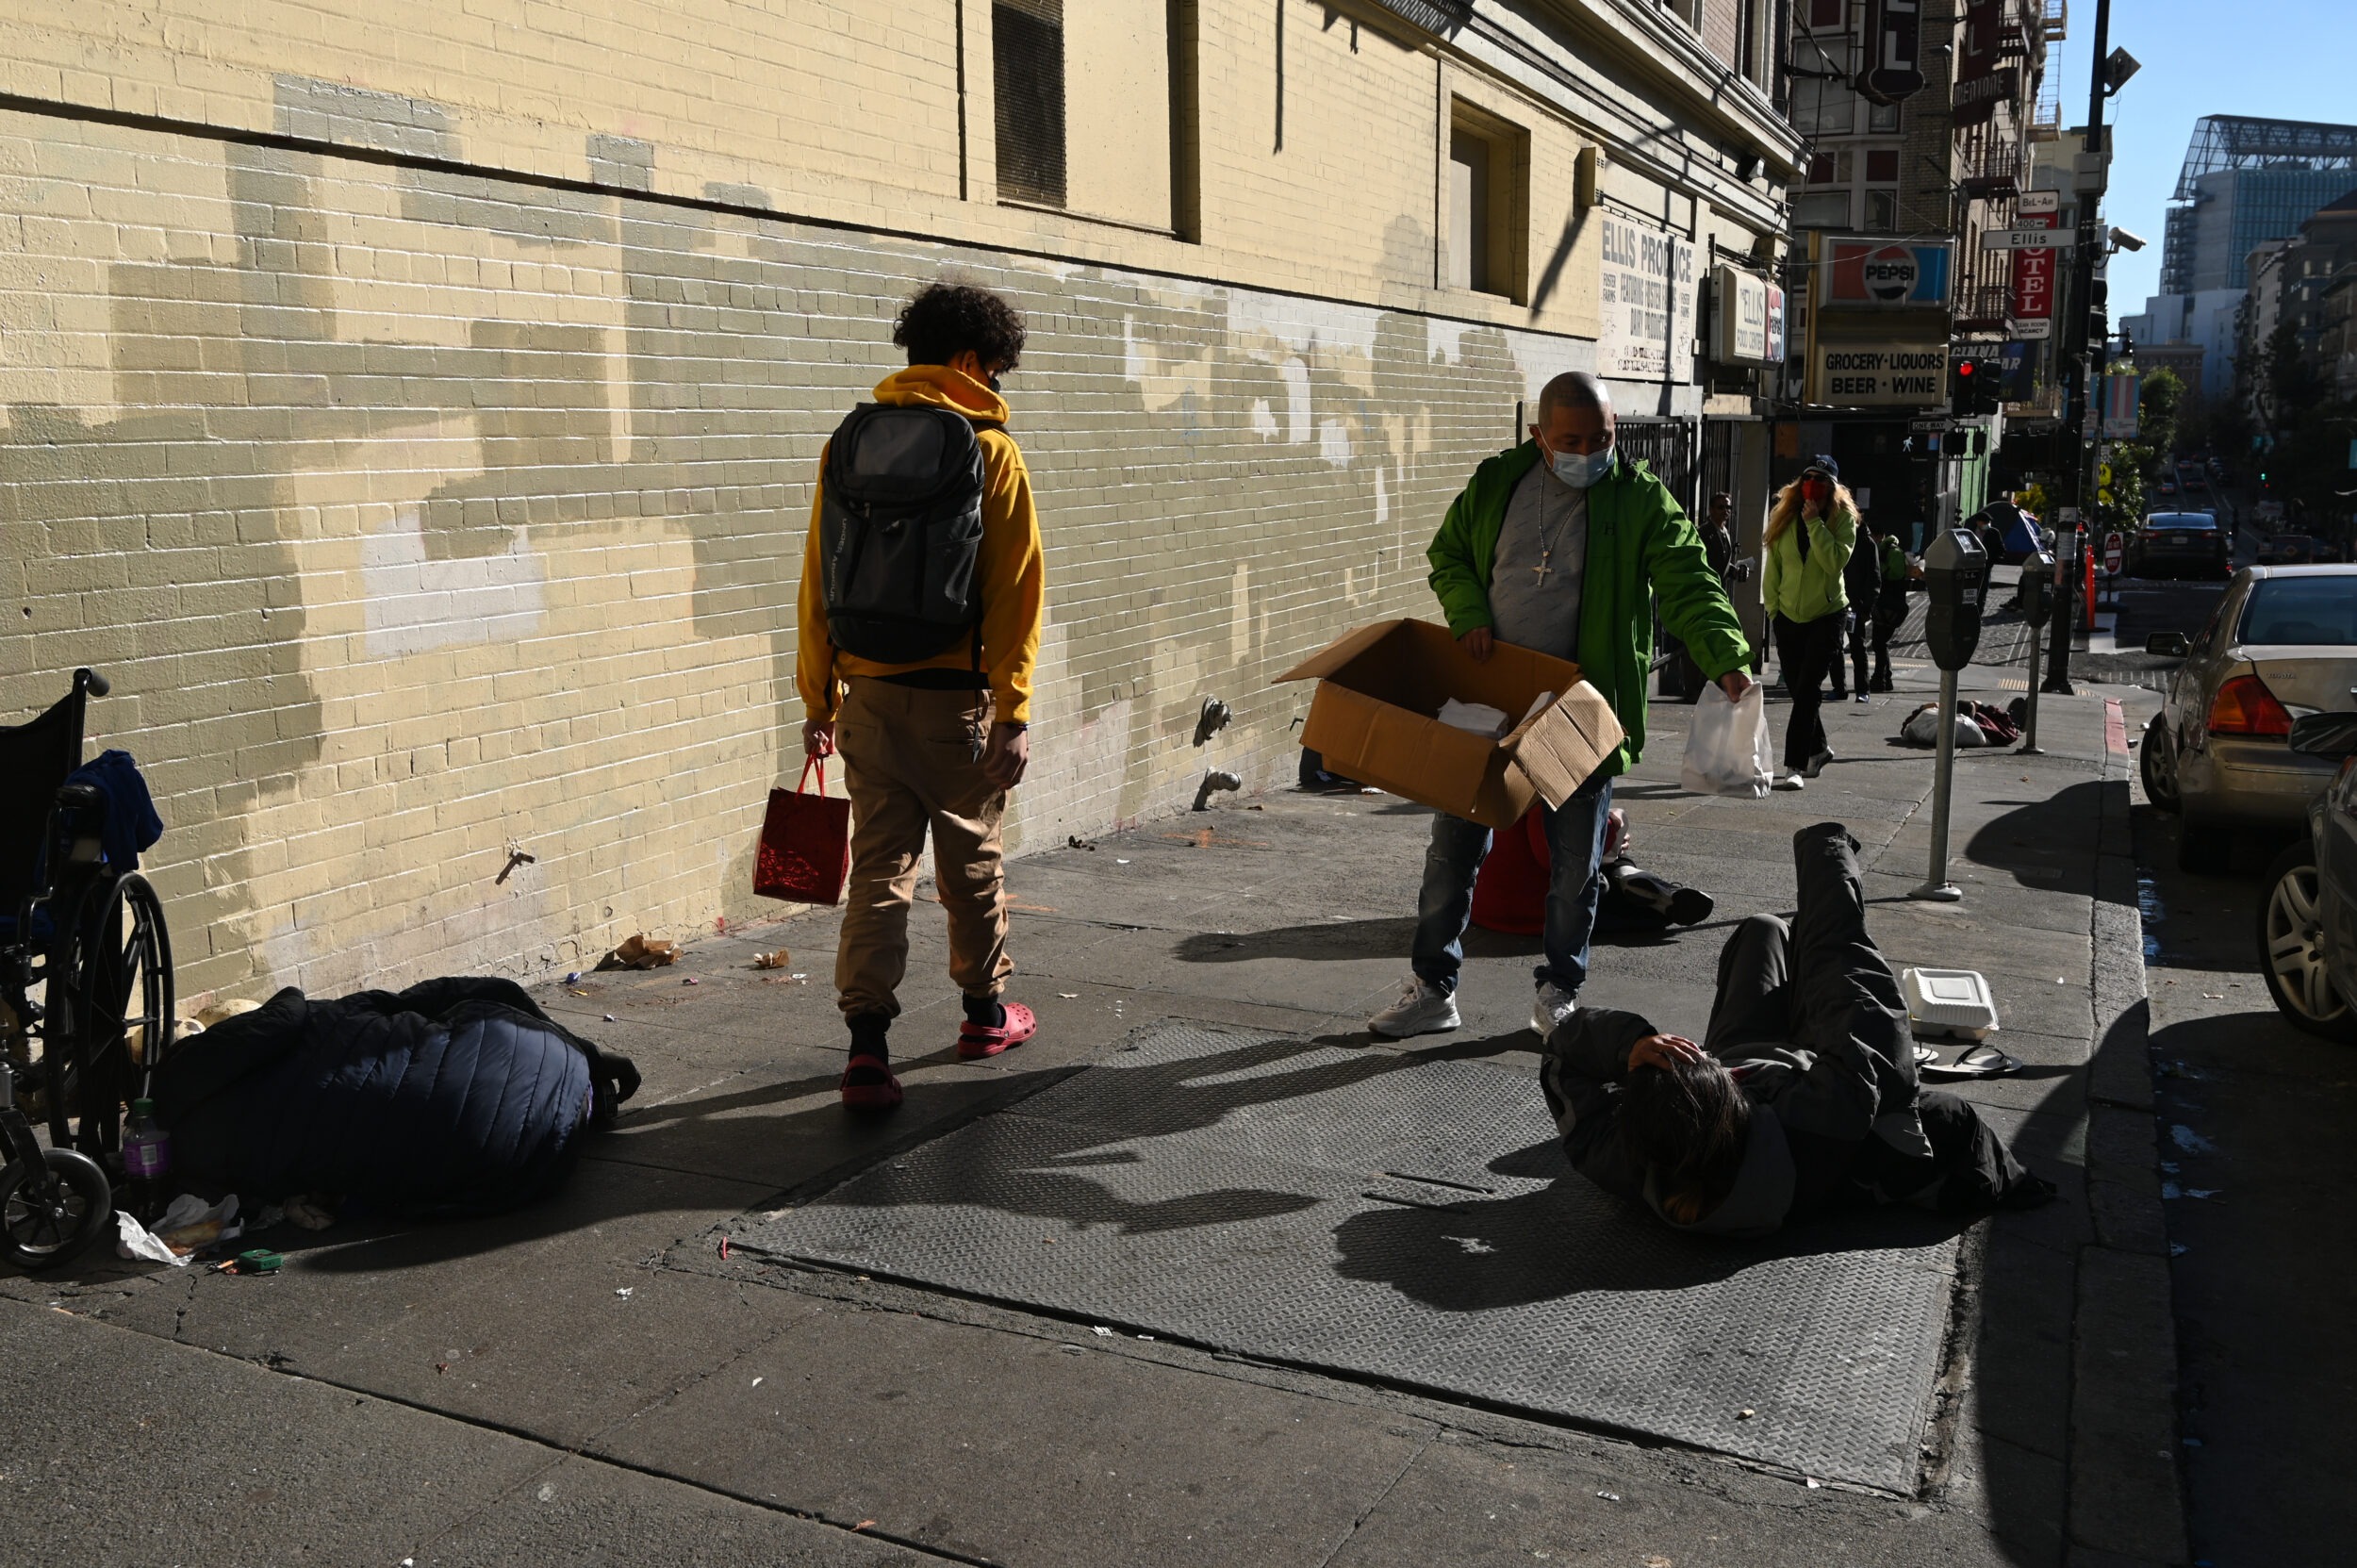 People walk past others lying on the sidewalk.